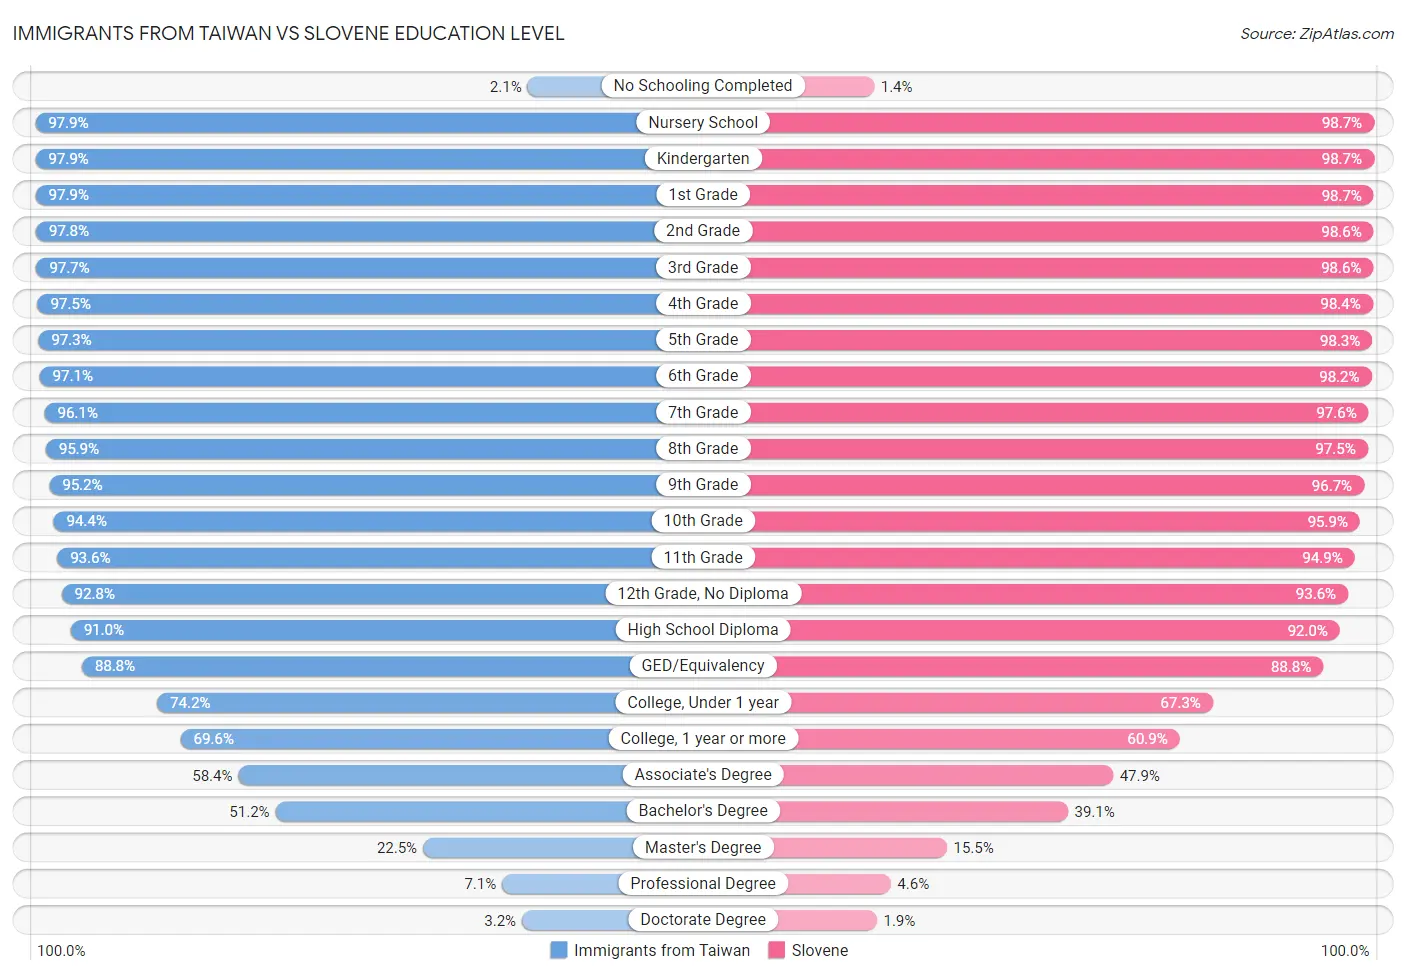 Immigrants from Taiwan vs Slovene Education Level